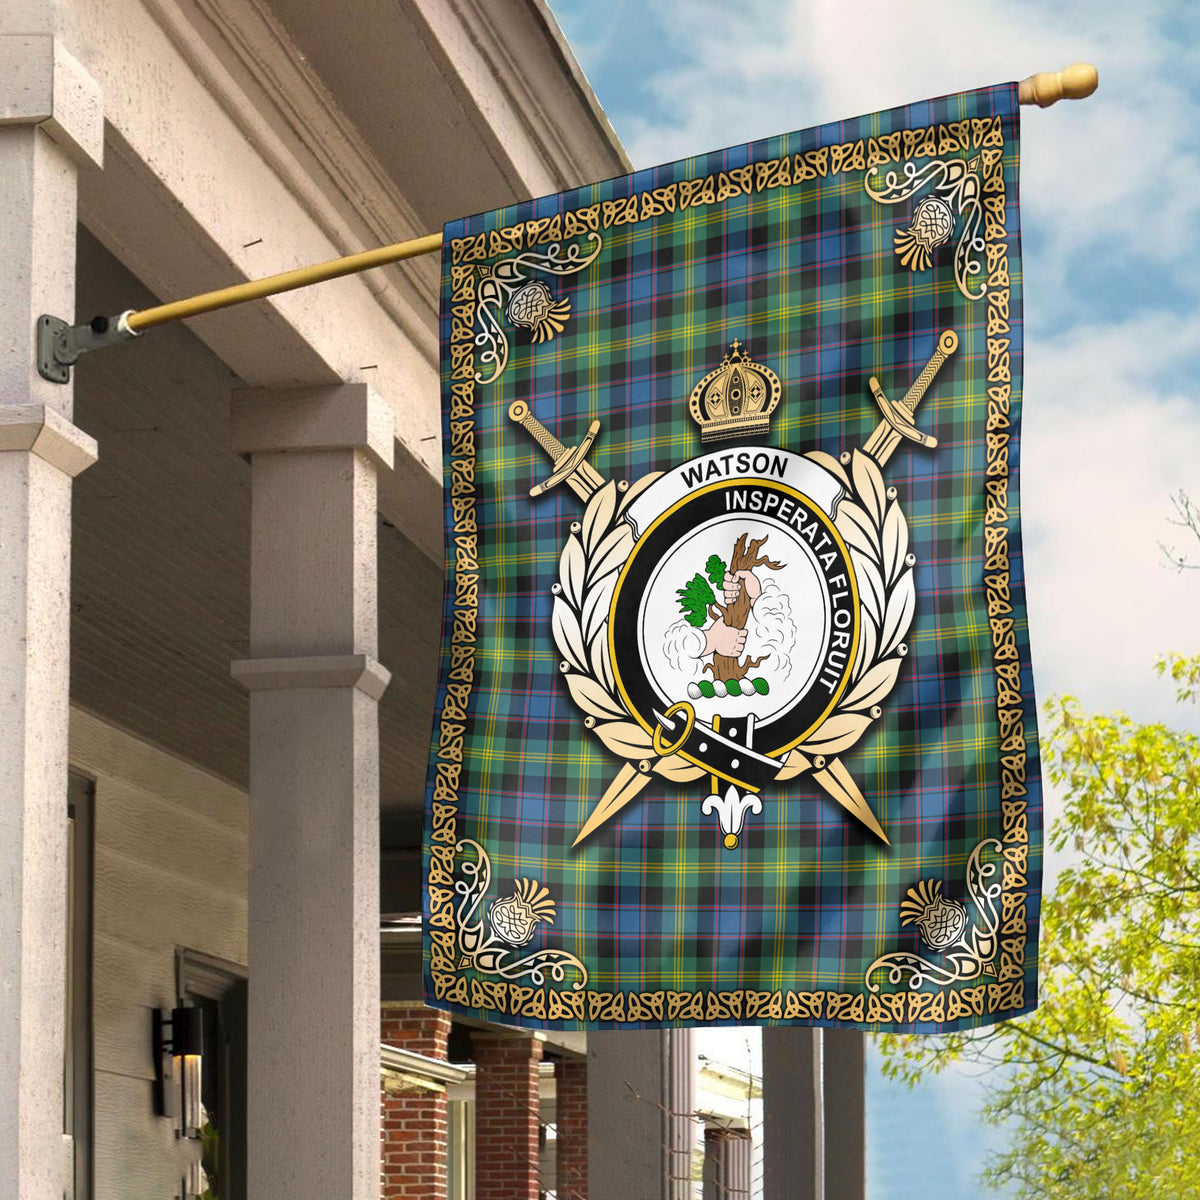 Watson Ancient Tartan Crest Garden Flag - Celtic Thistle Style